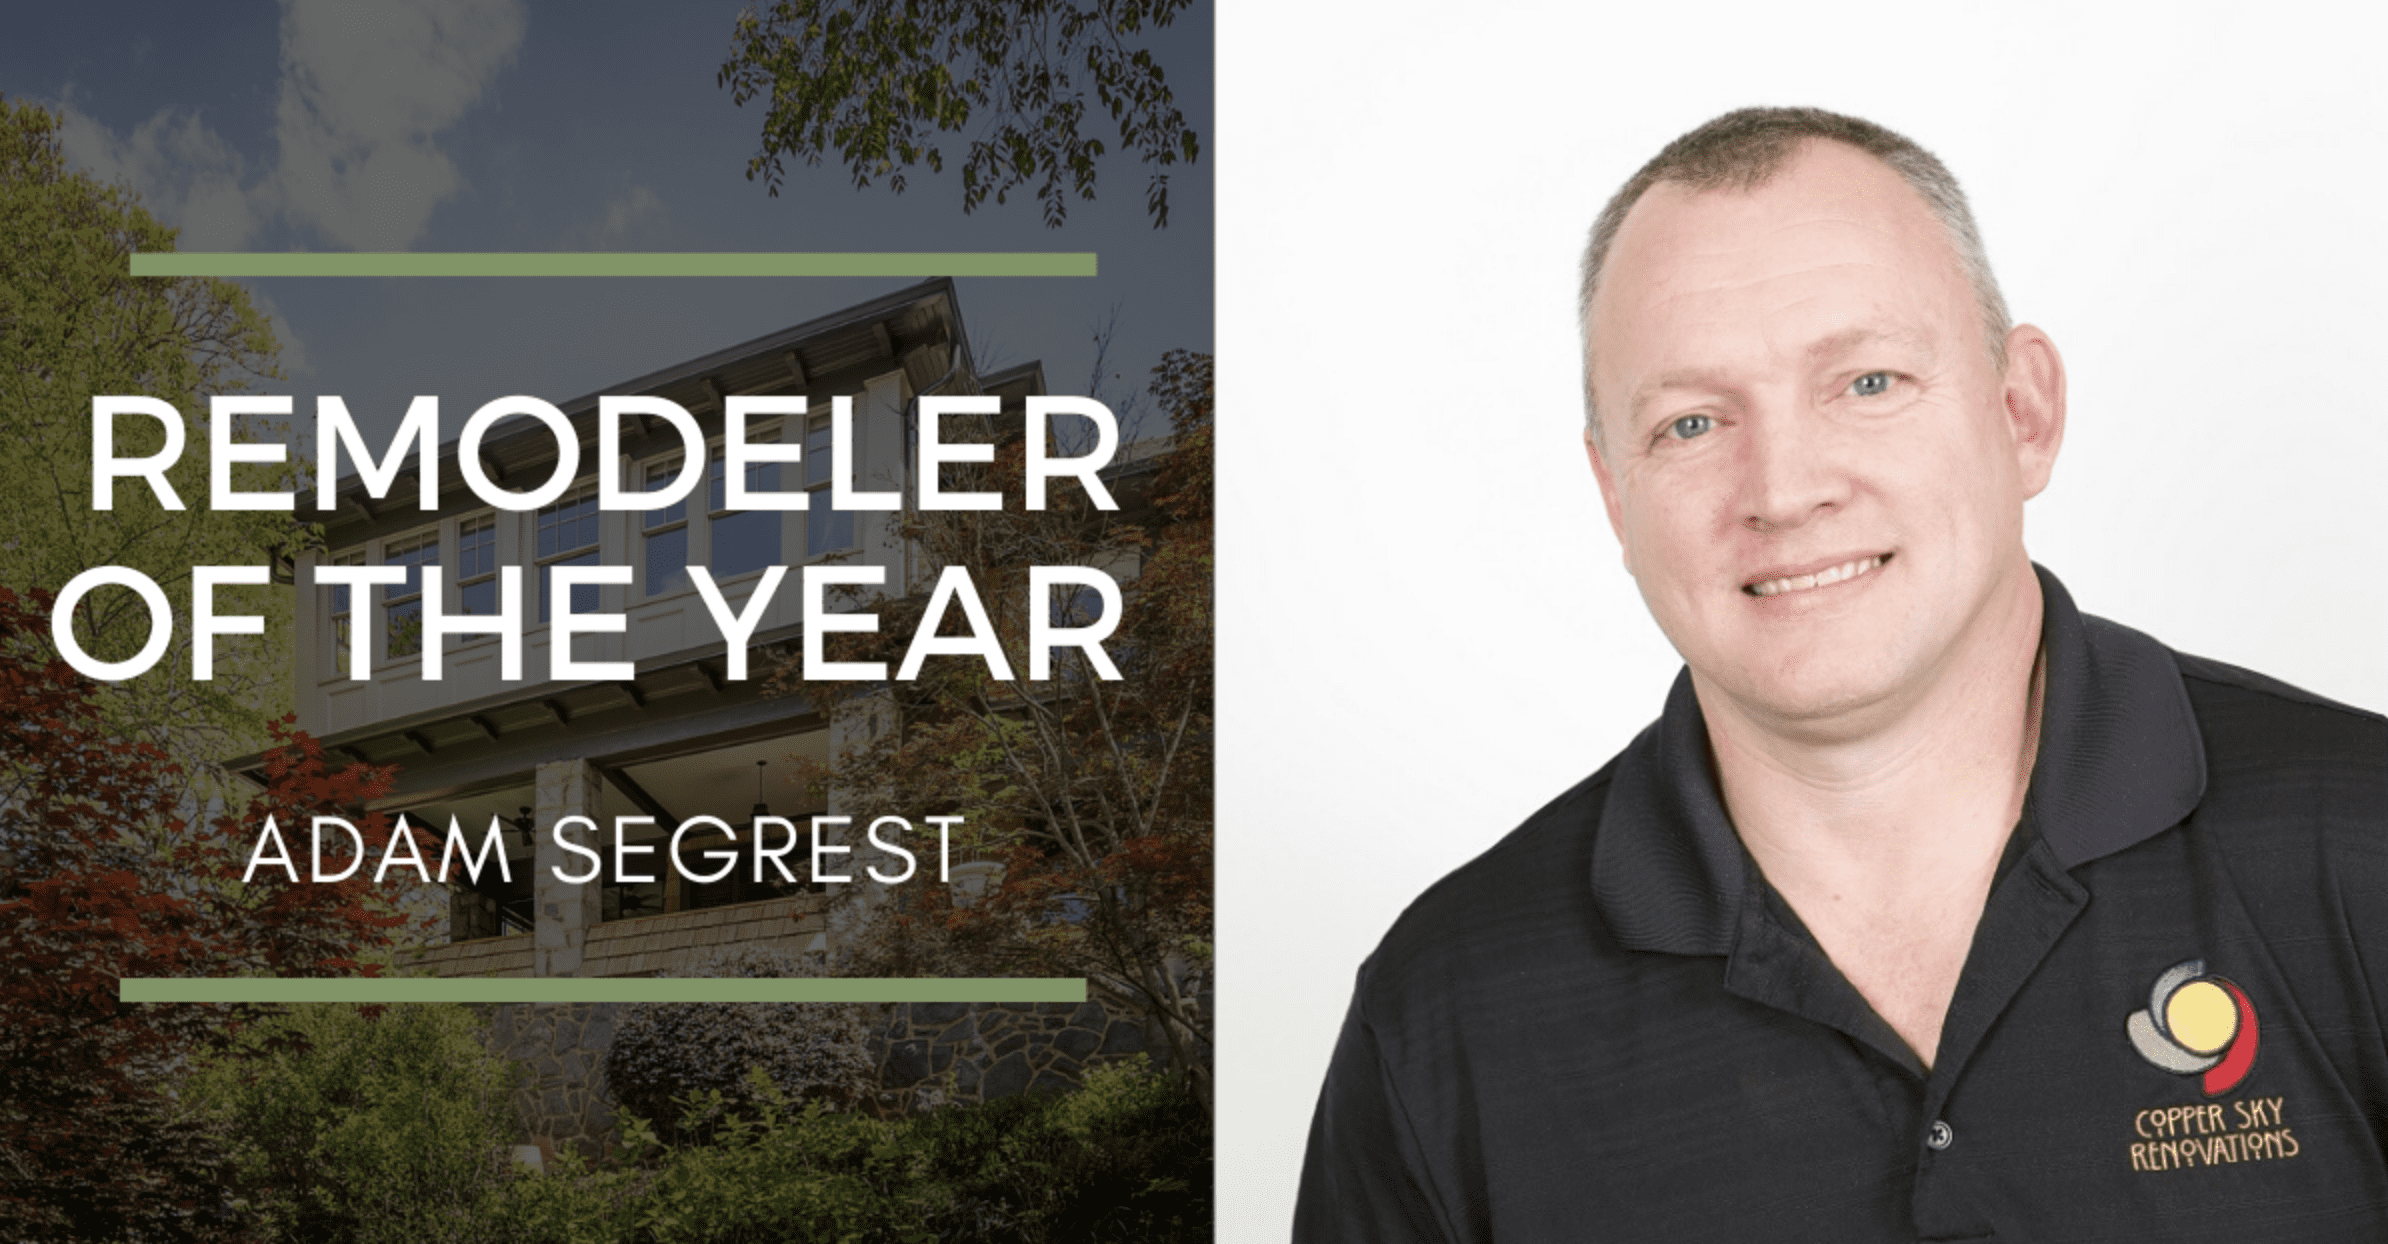 Adam Segrest of Copper Sky Renovations Wins 2019 Remodeler of the Year